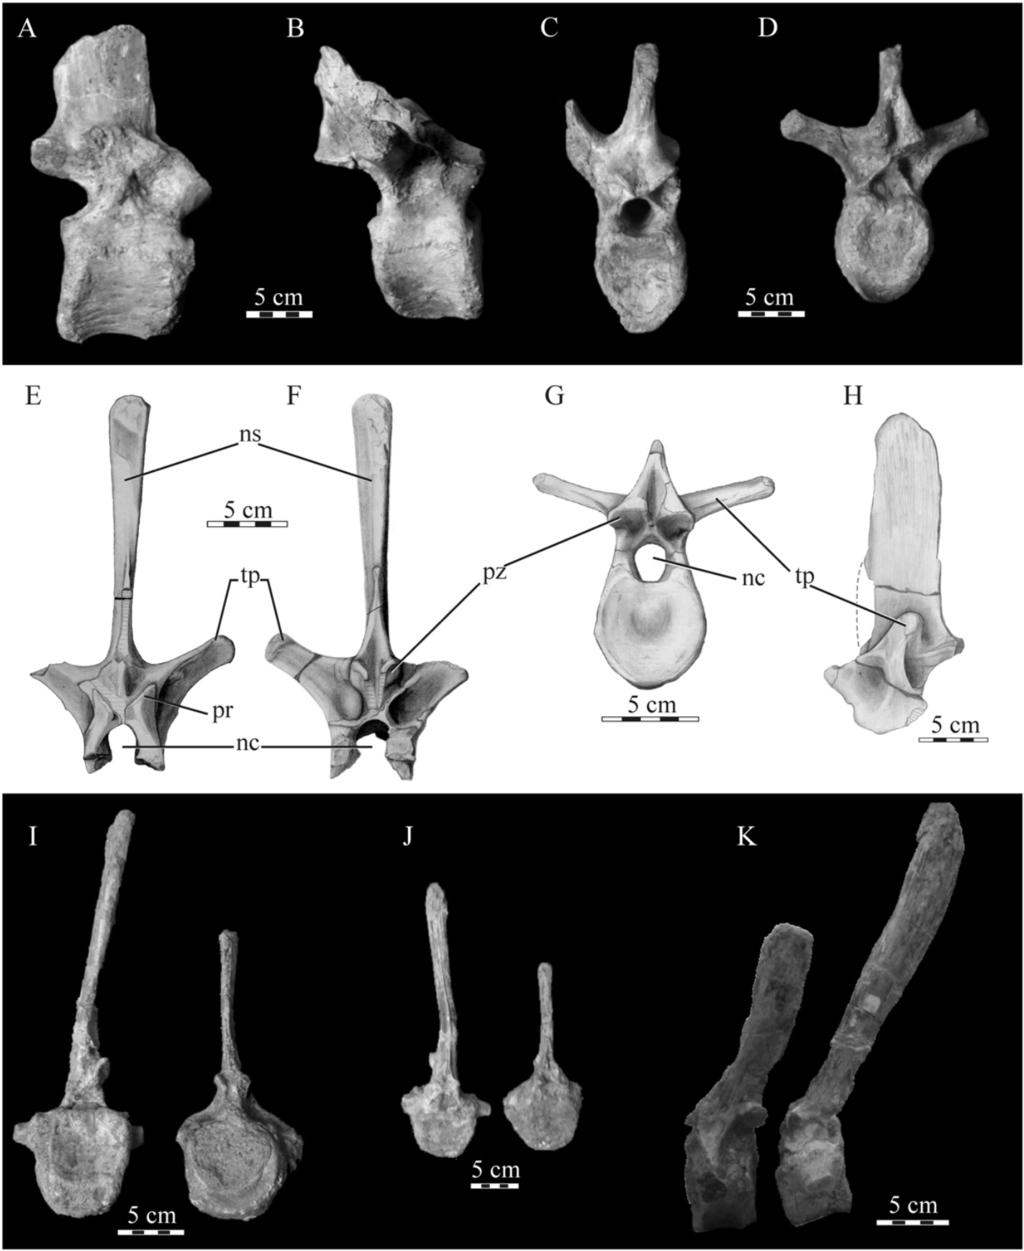 Juárez Valieri et al.: A new hadrosauroid from Patagonia 223 Fig. 5. Willinakaqe salitralensis gen. et sp. nov.; vertebrae.